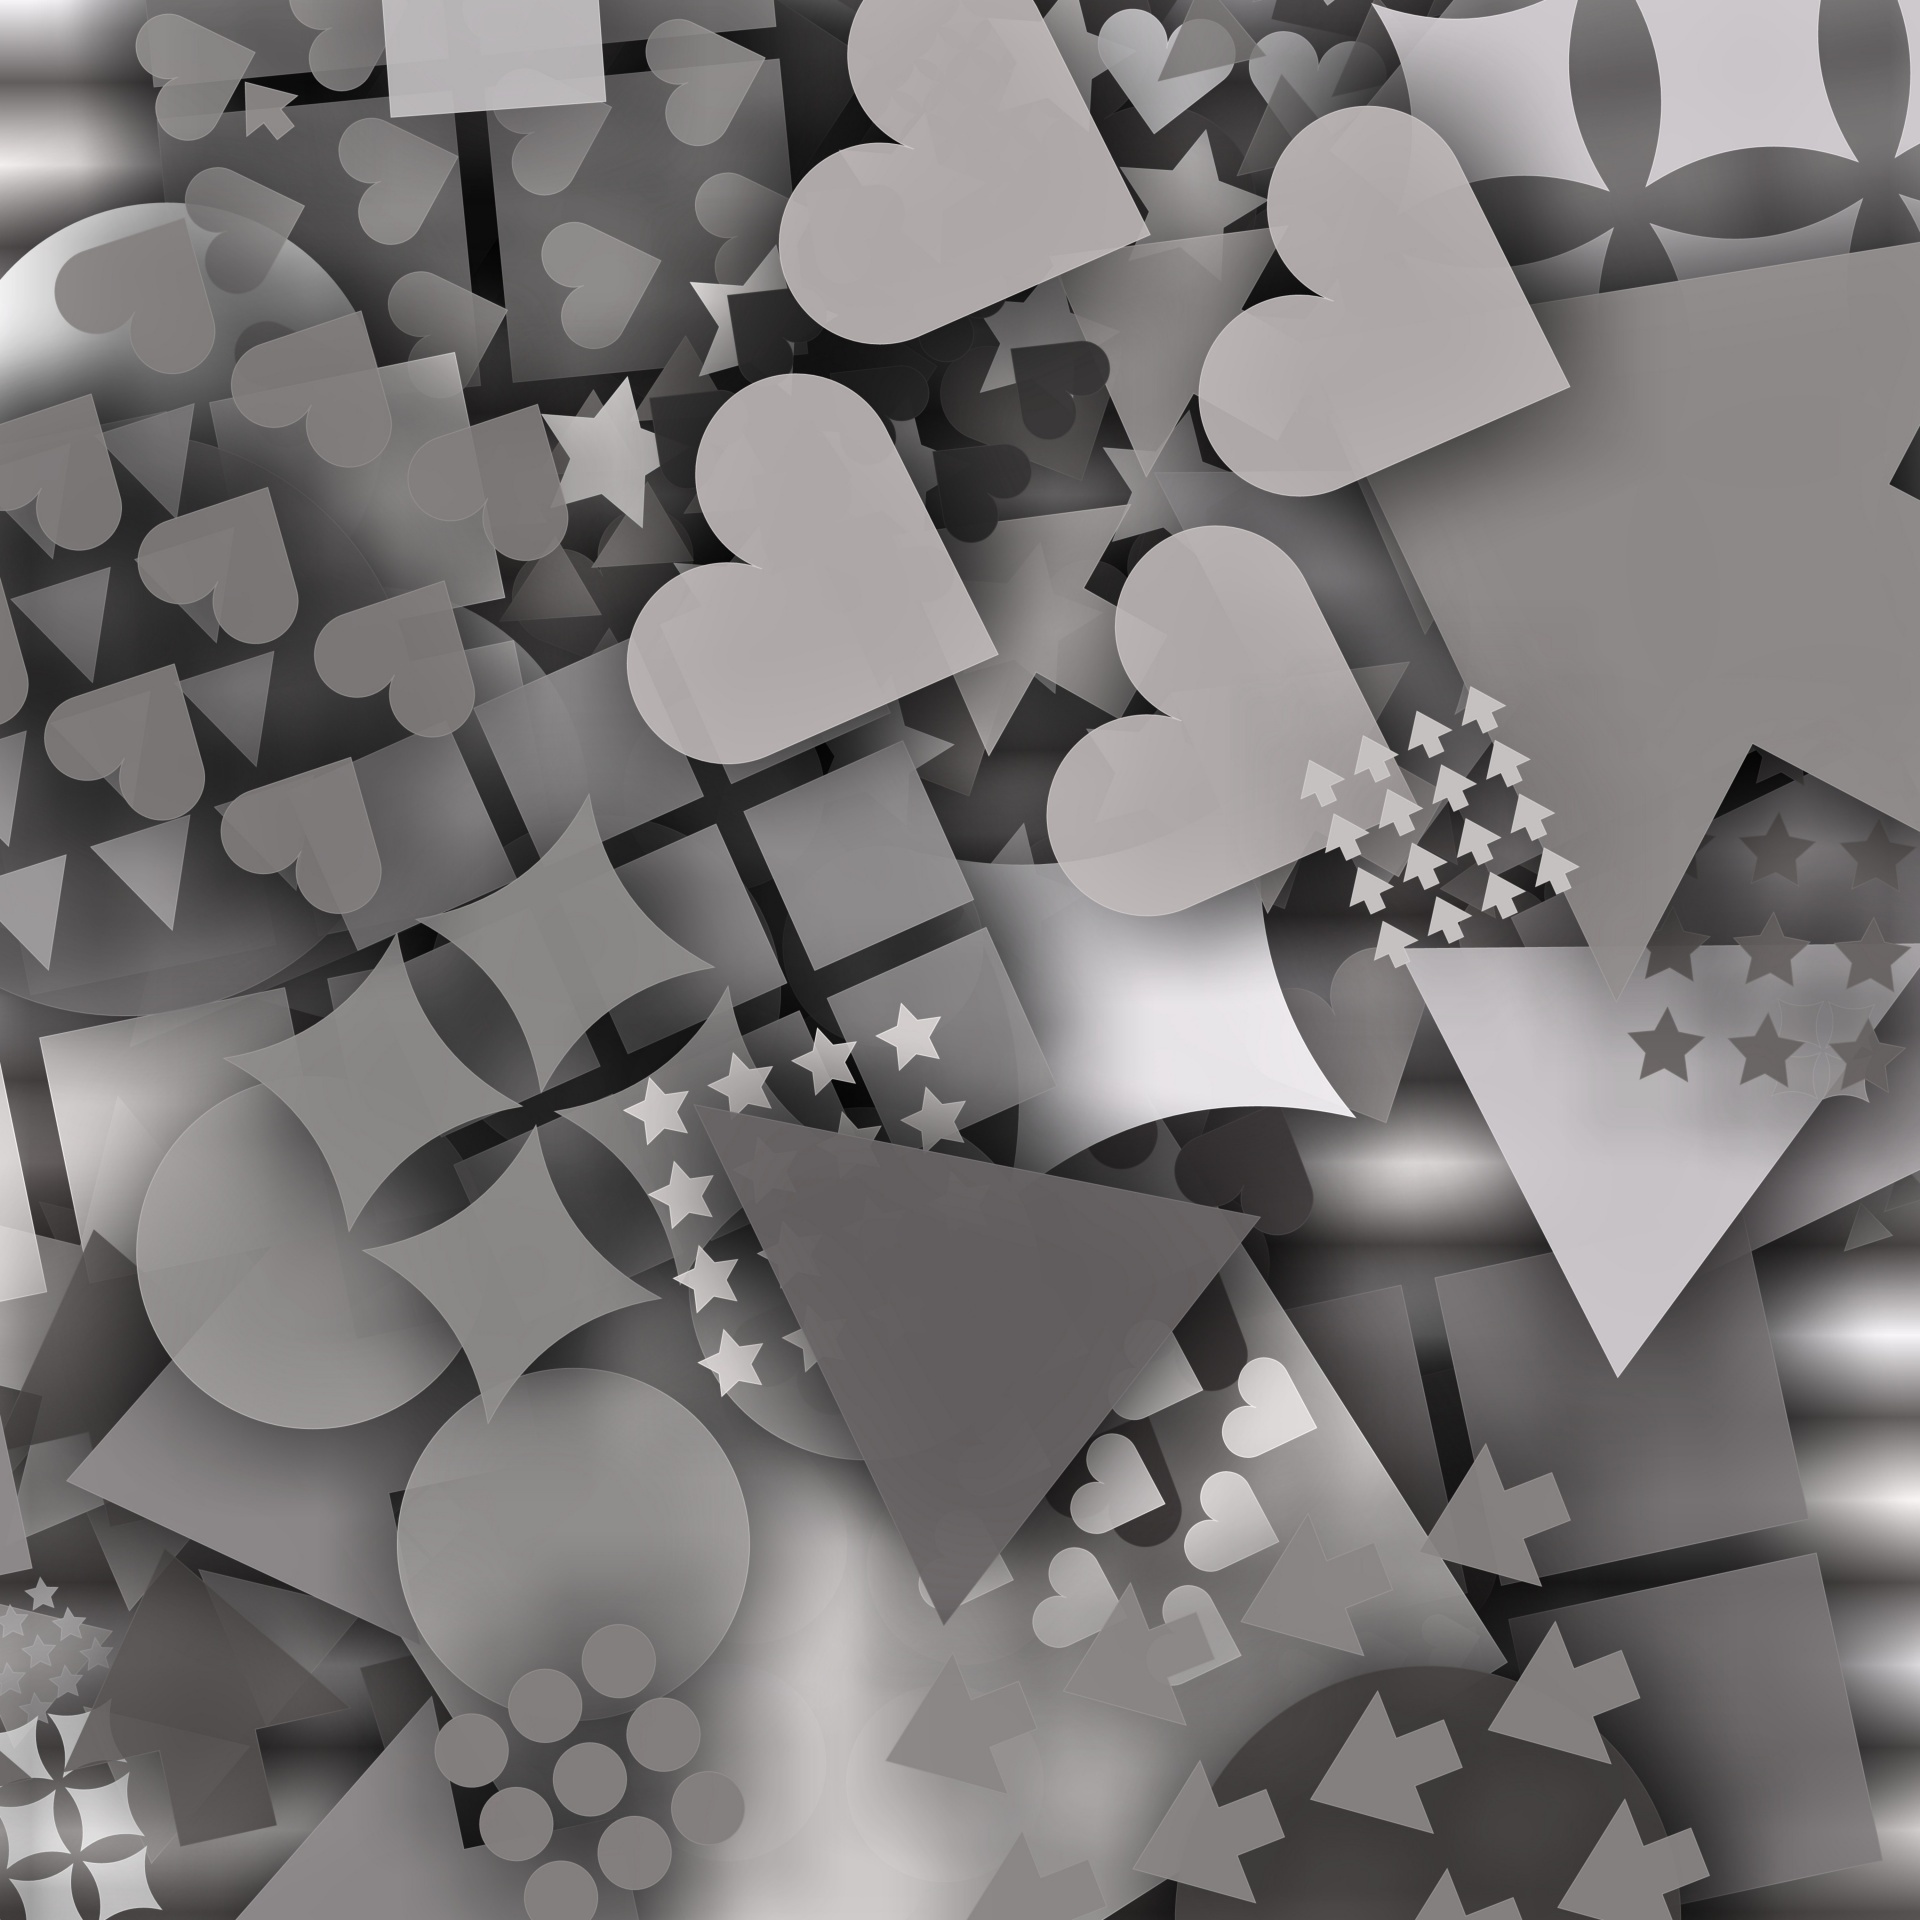 Download free photo of Wallpaper, grey, mixed, shapes, hearts